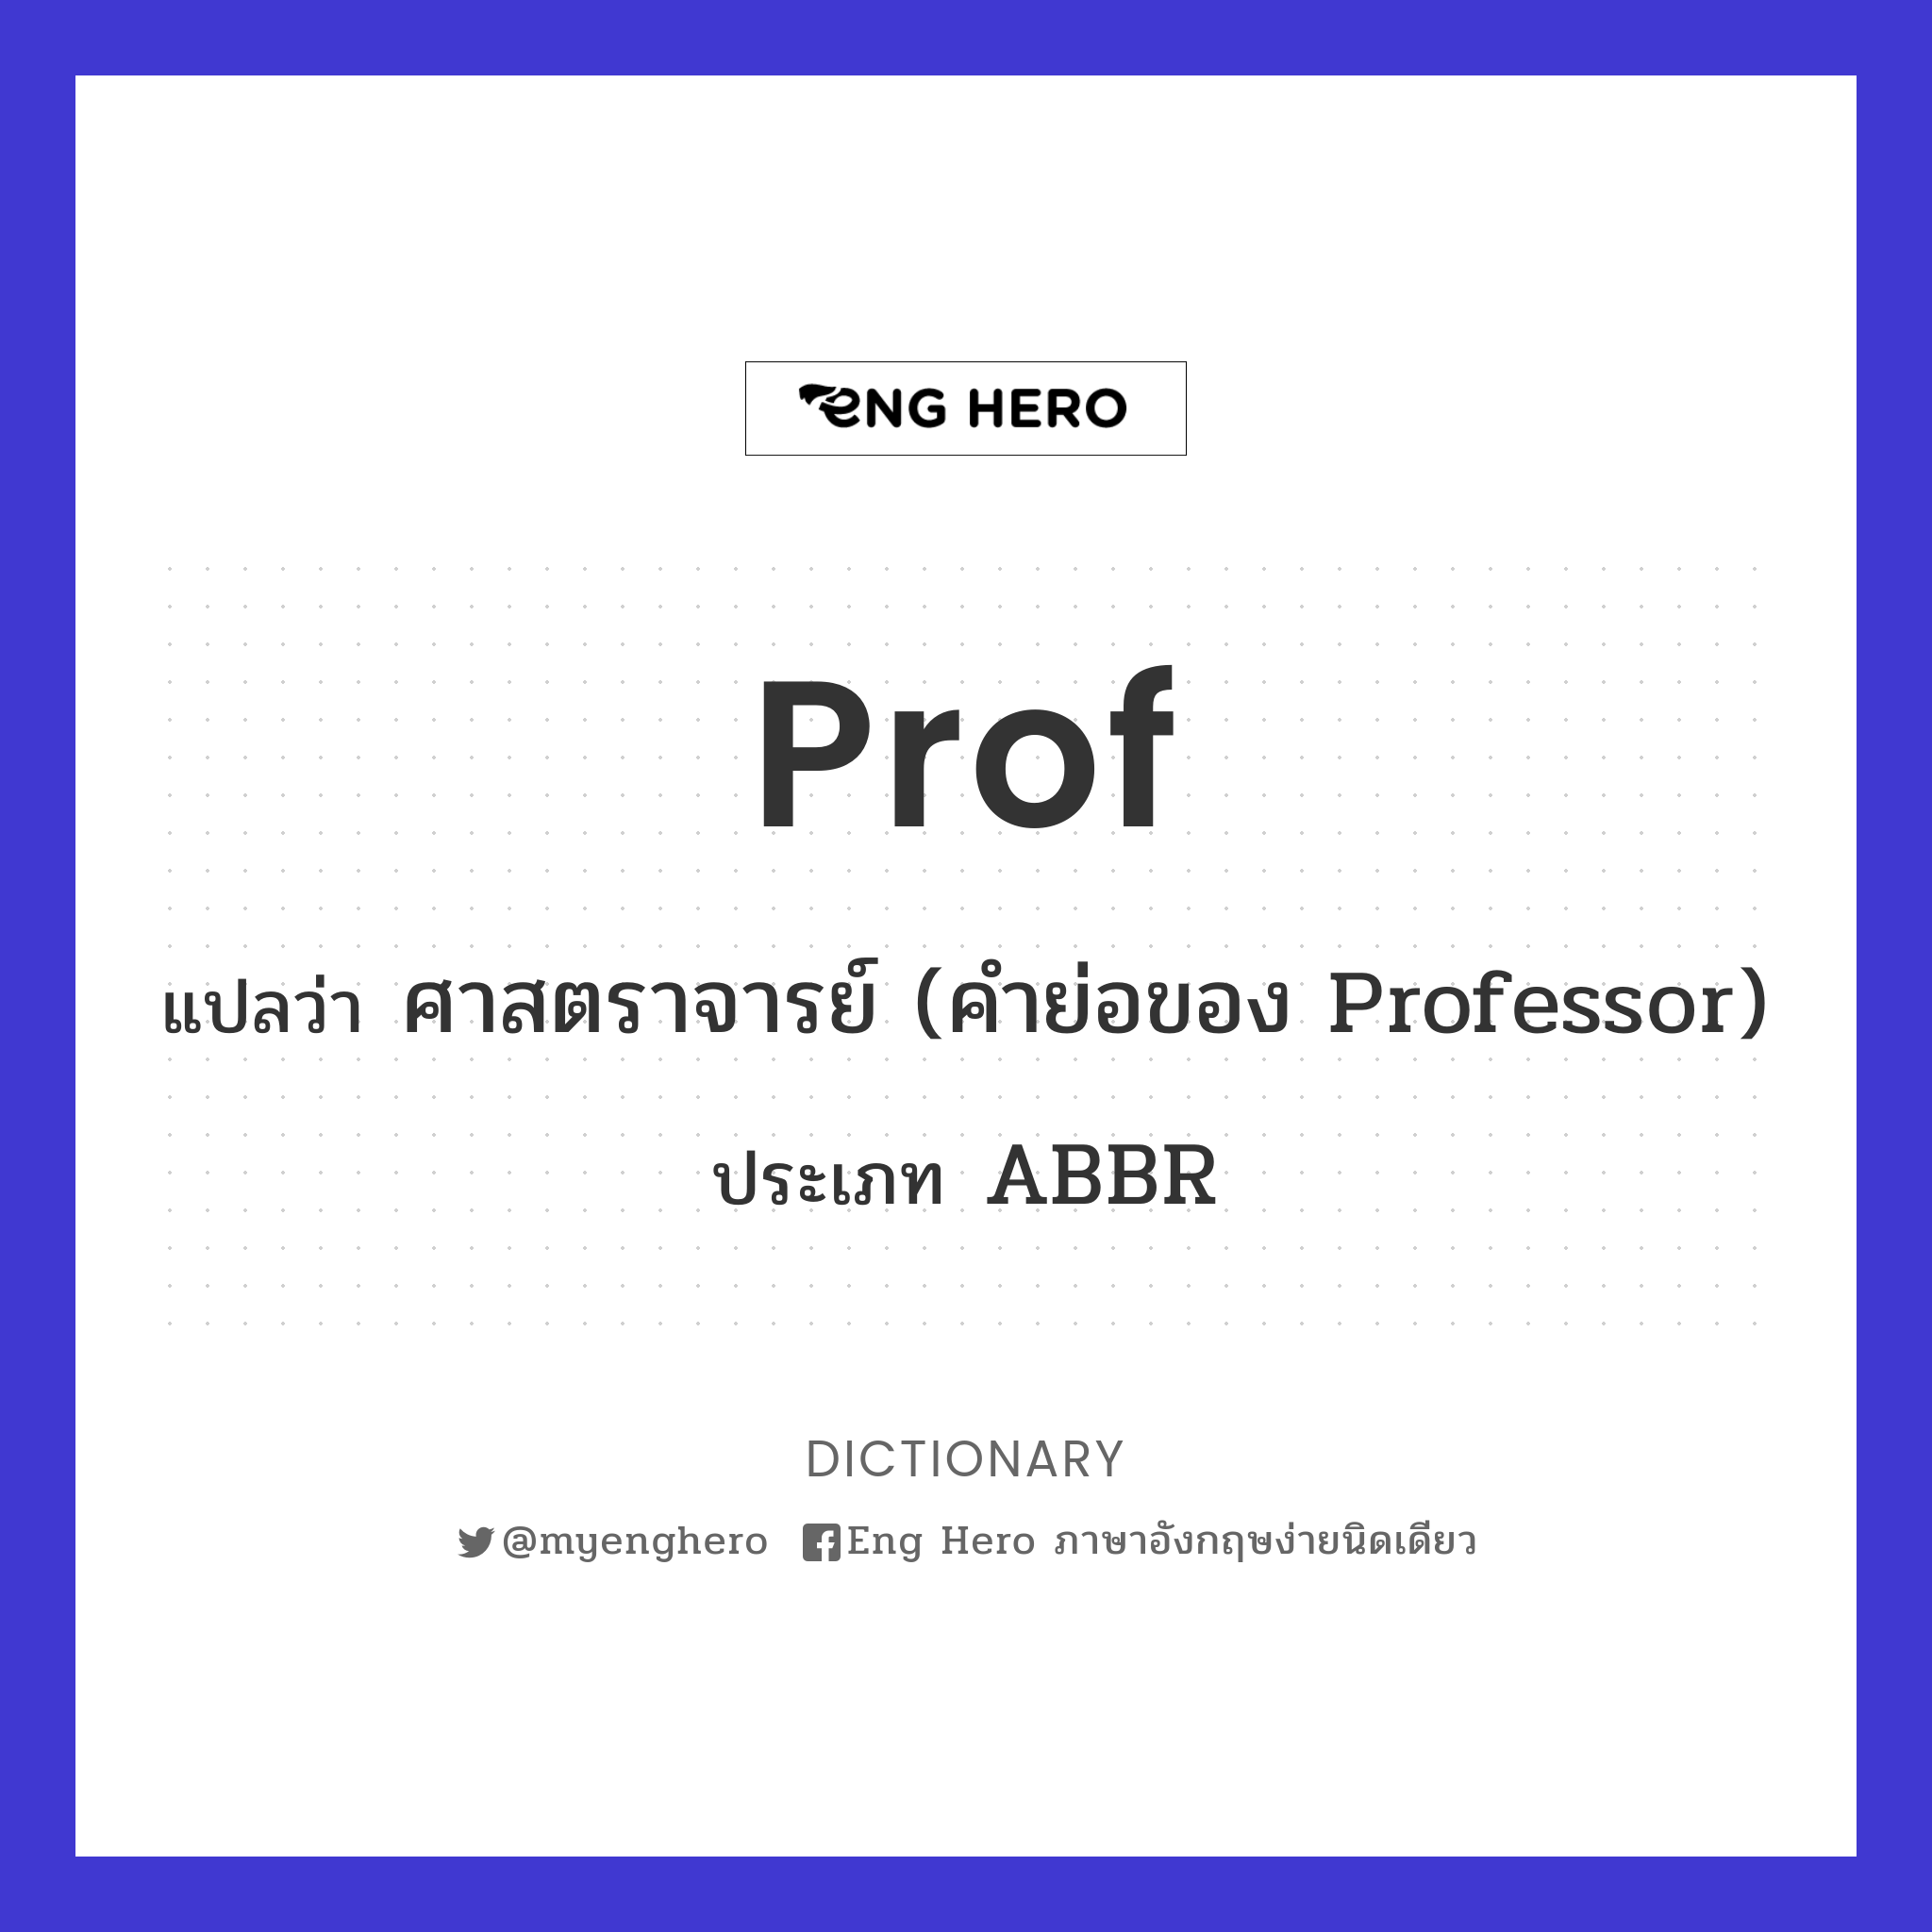 Prof แปลว่า ศาสตราจารย์ (คำย่อของ Professor) | Eng Hero เรียนภาษาอังกฤษ  ออนไลน์ ฟรี